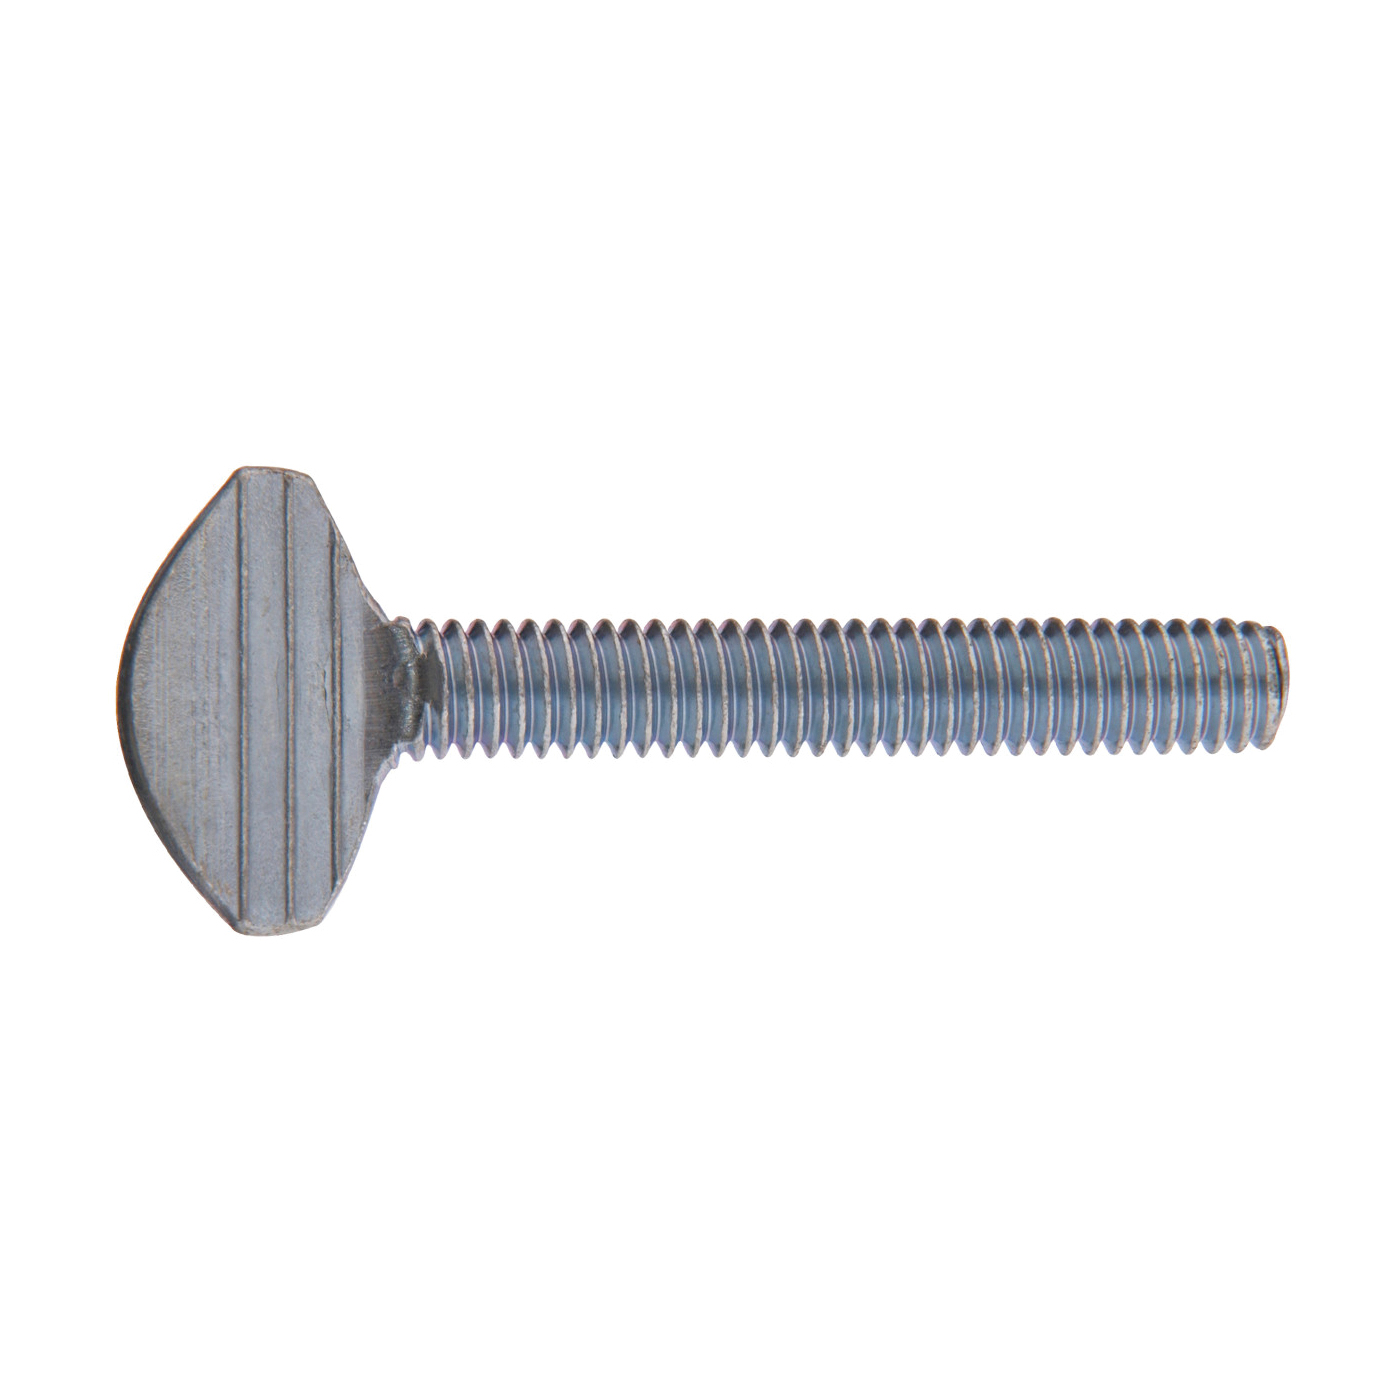 880951 Machine Screw, 1/4-20 Thread, 1/2 in L, Coarse Thread, Blunt Point, Steel, Zinc-Plated